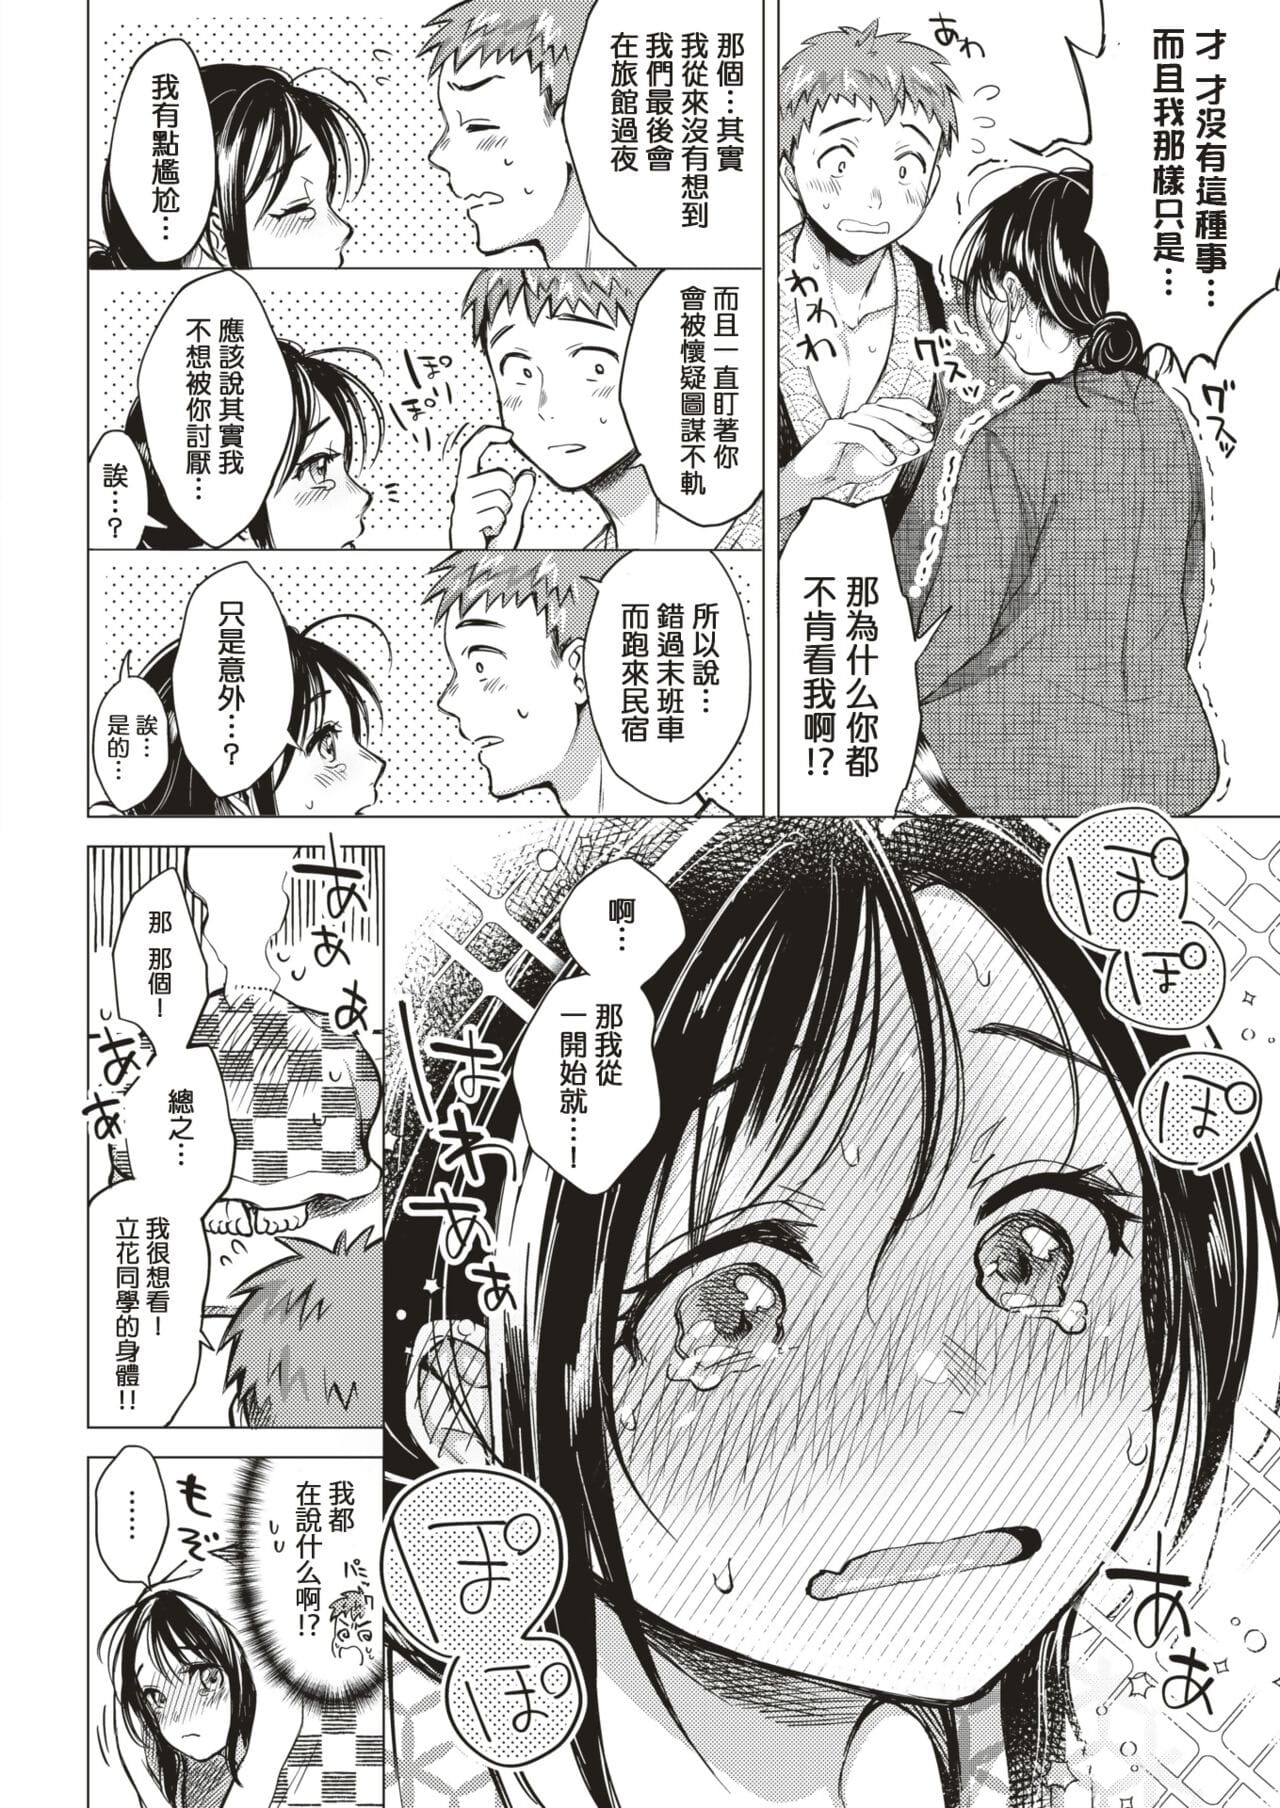 7 gatsu geen ougonhi page 1